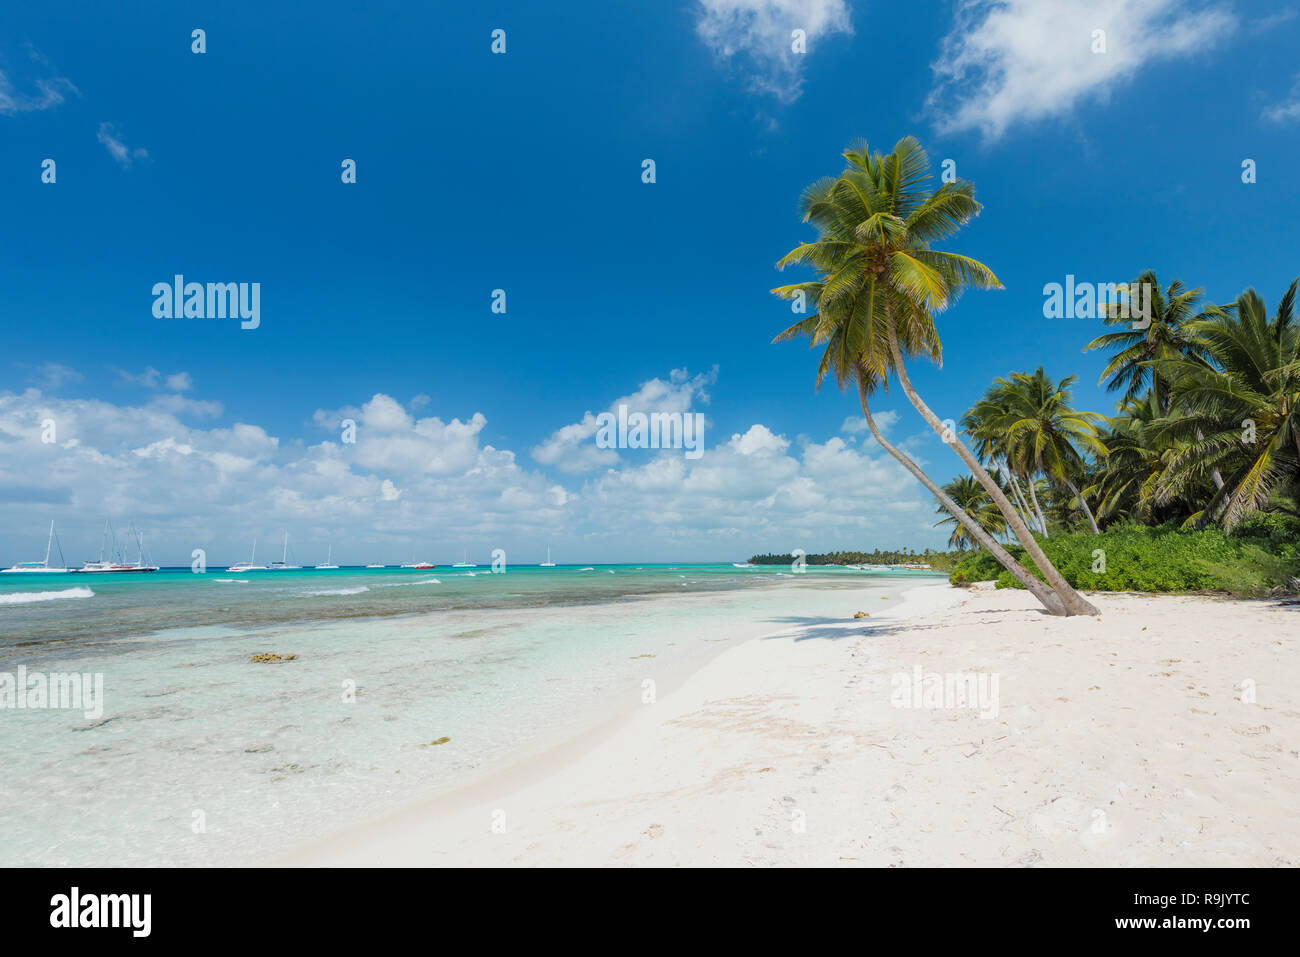 Traumstrand der Karibik, Dream beach of the Caribbean Stock Photo